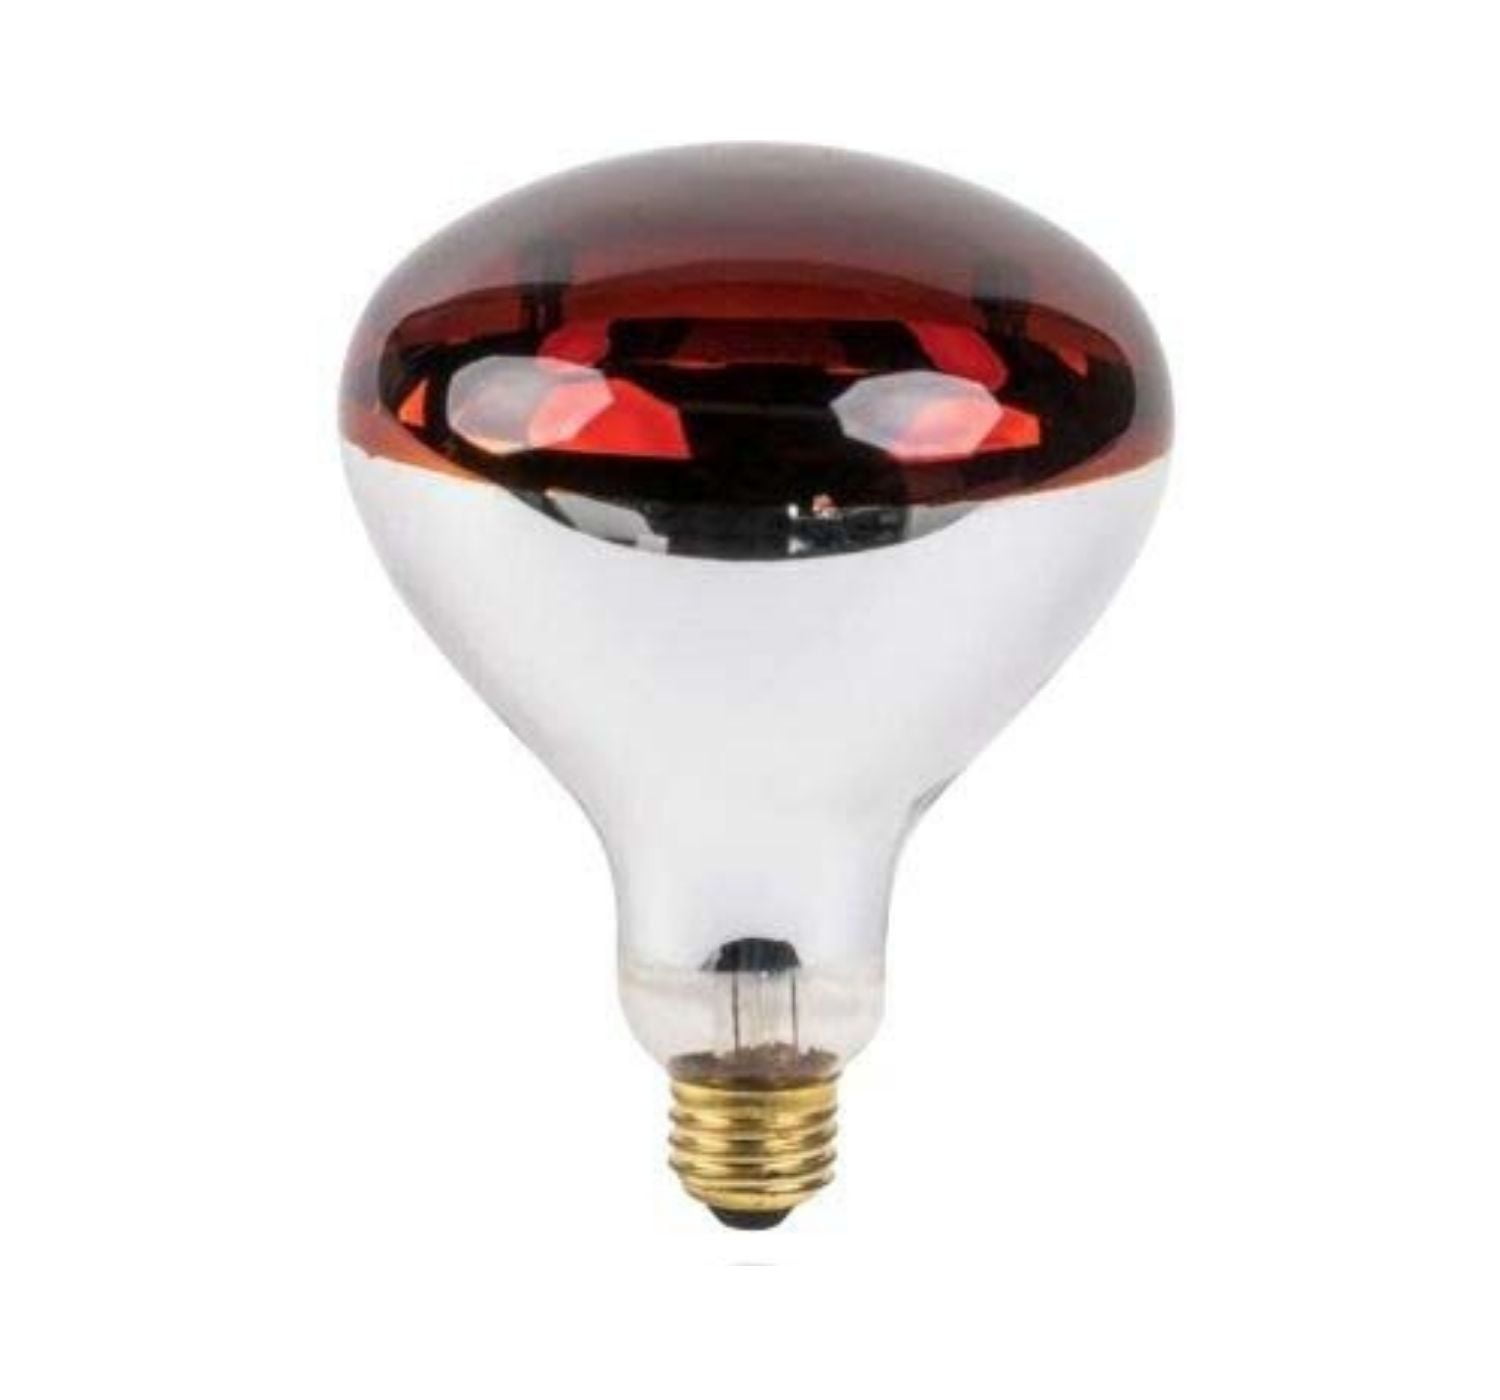 Red 250 Watt Heat Lamp Bulb Weatherproof Good for Baby Chicks & Reptiles R40 1 